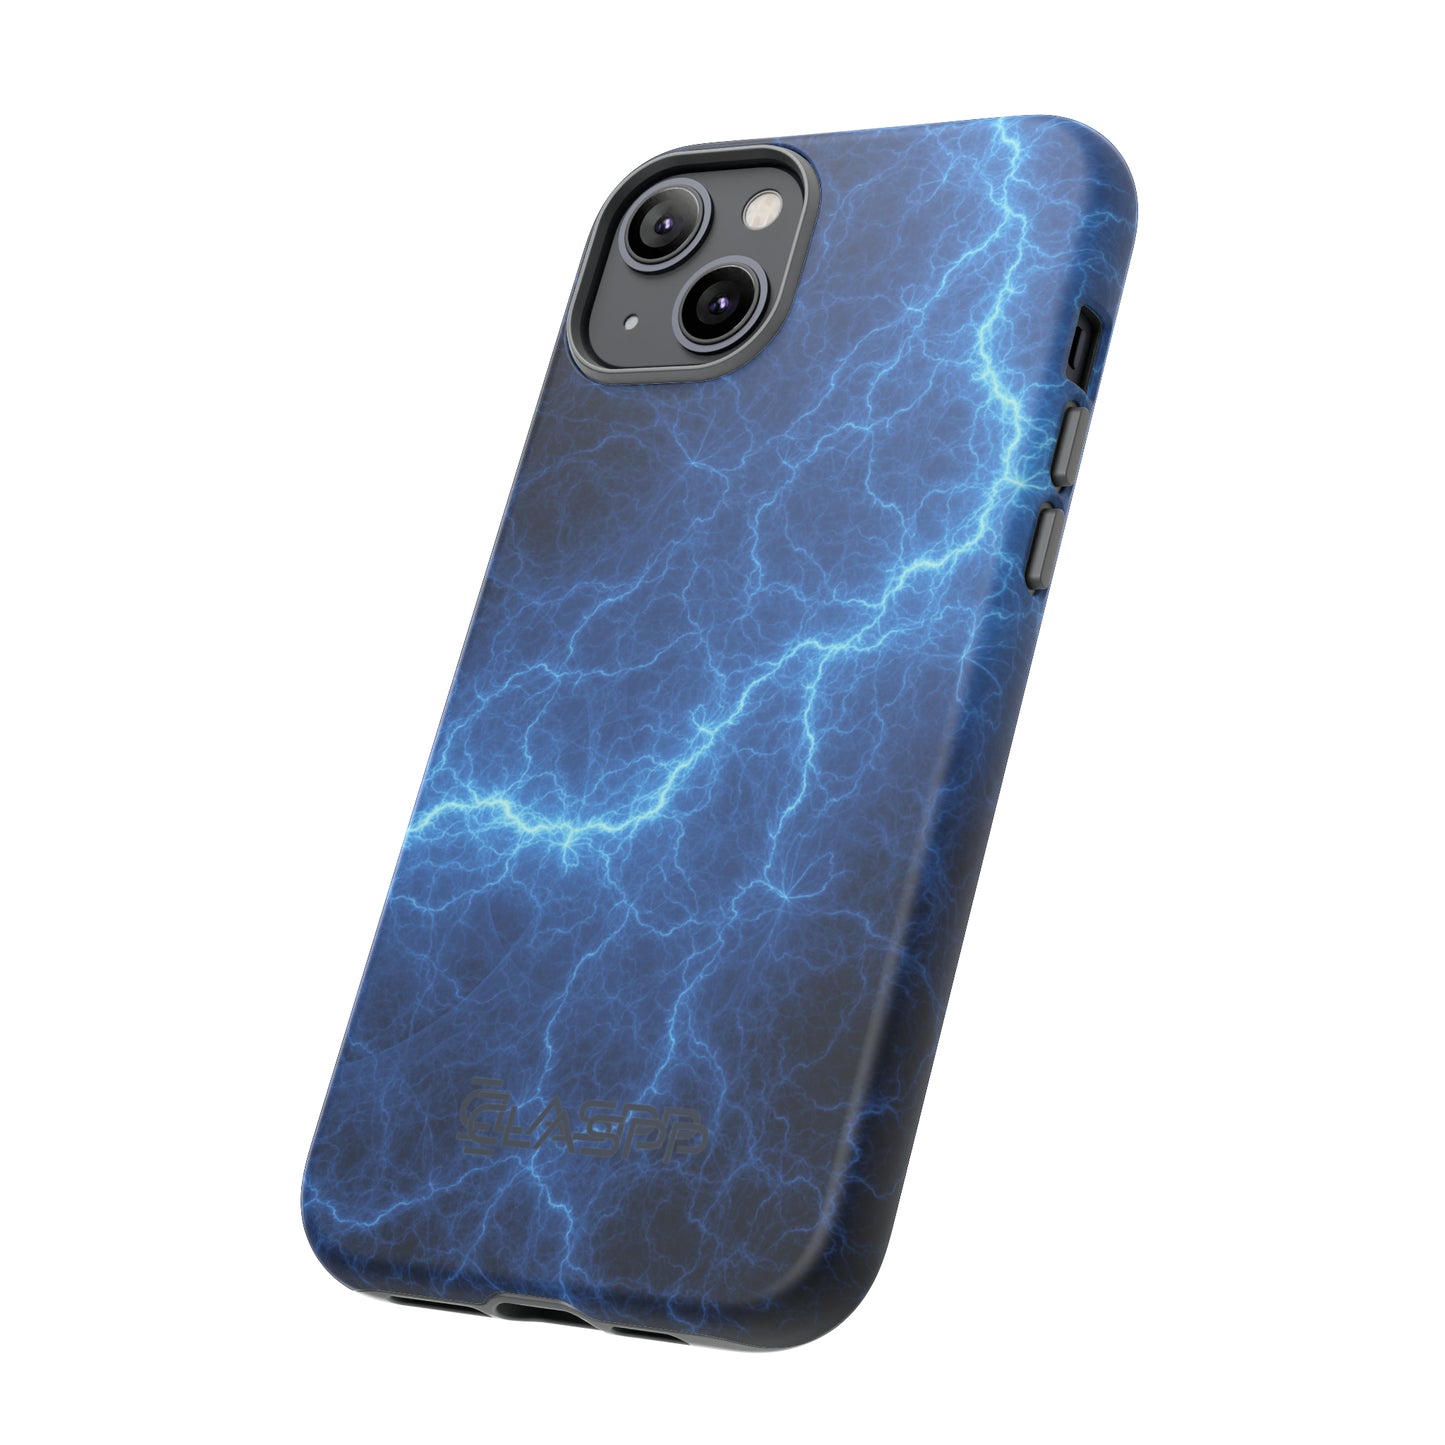 Super Power | Hardshell Dual Layer Phone Case